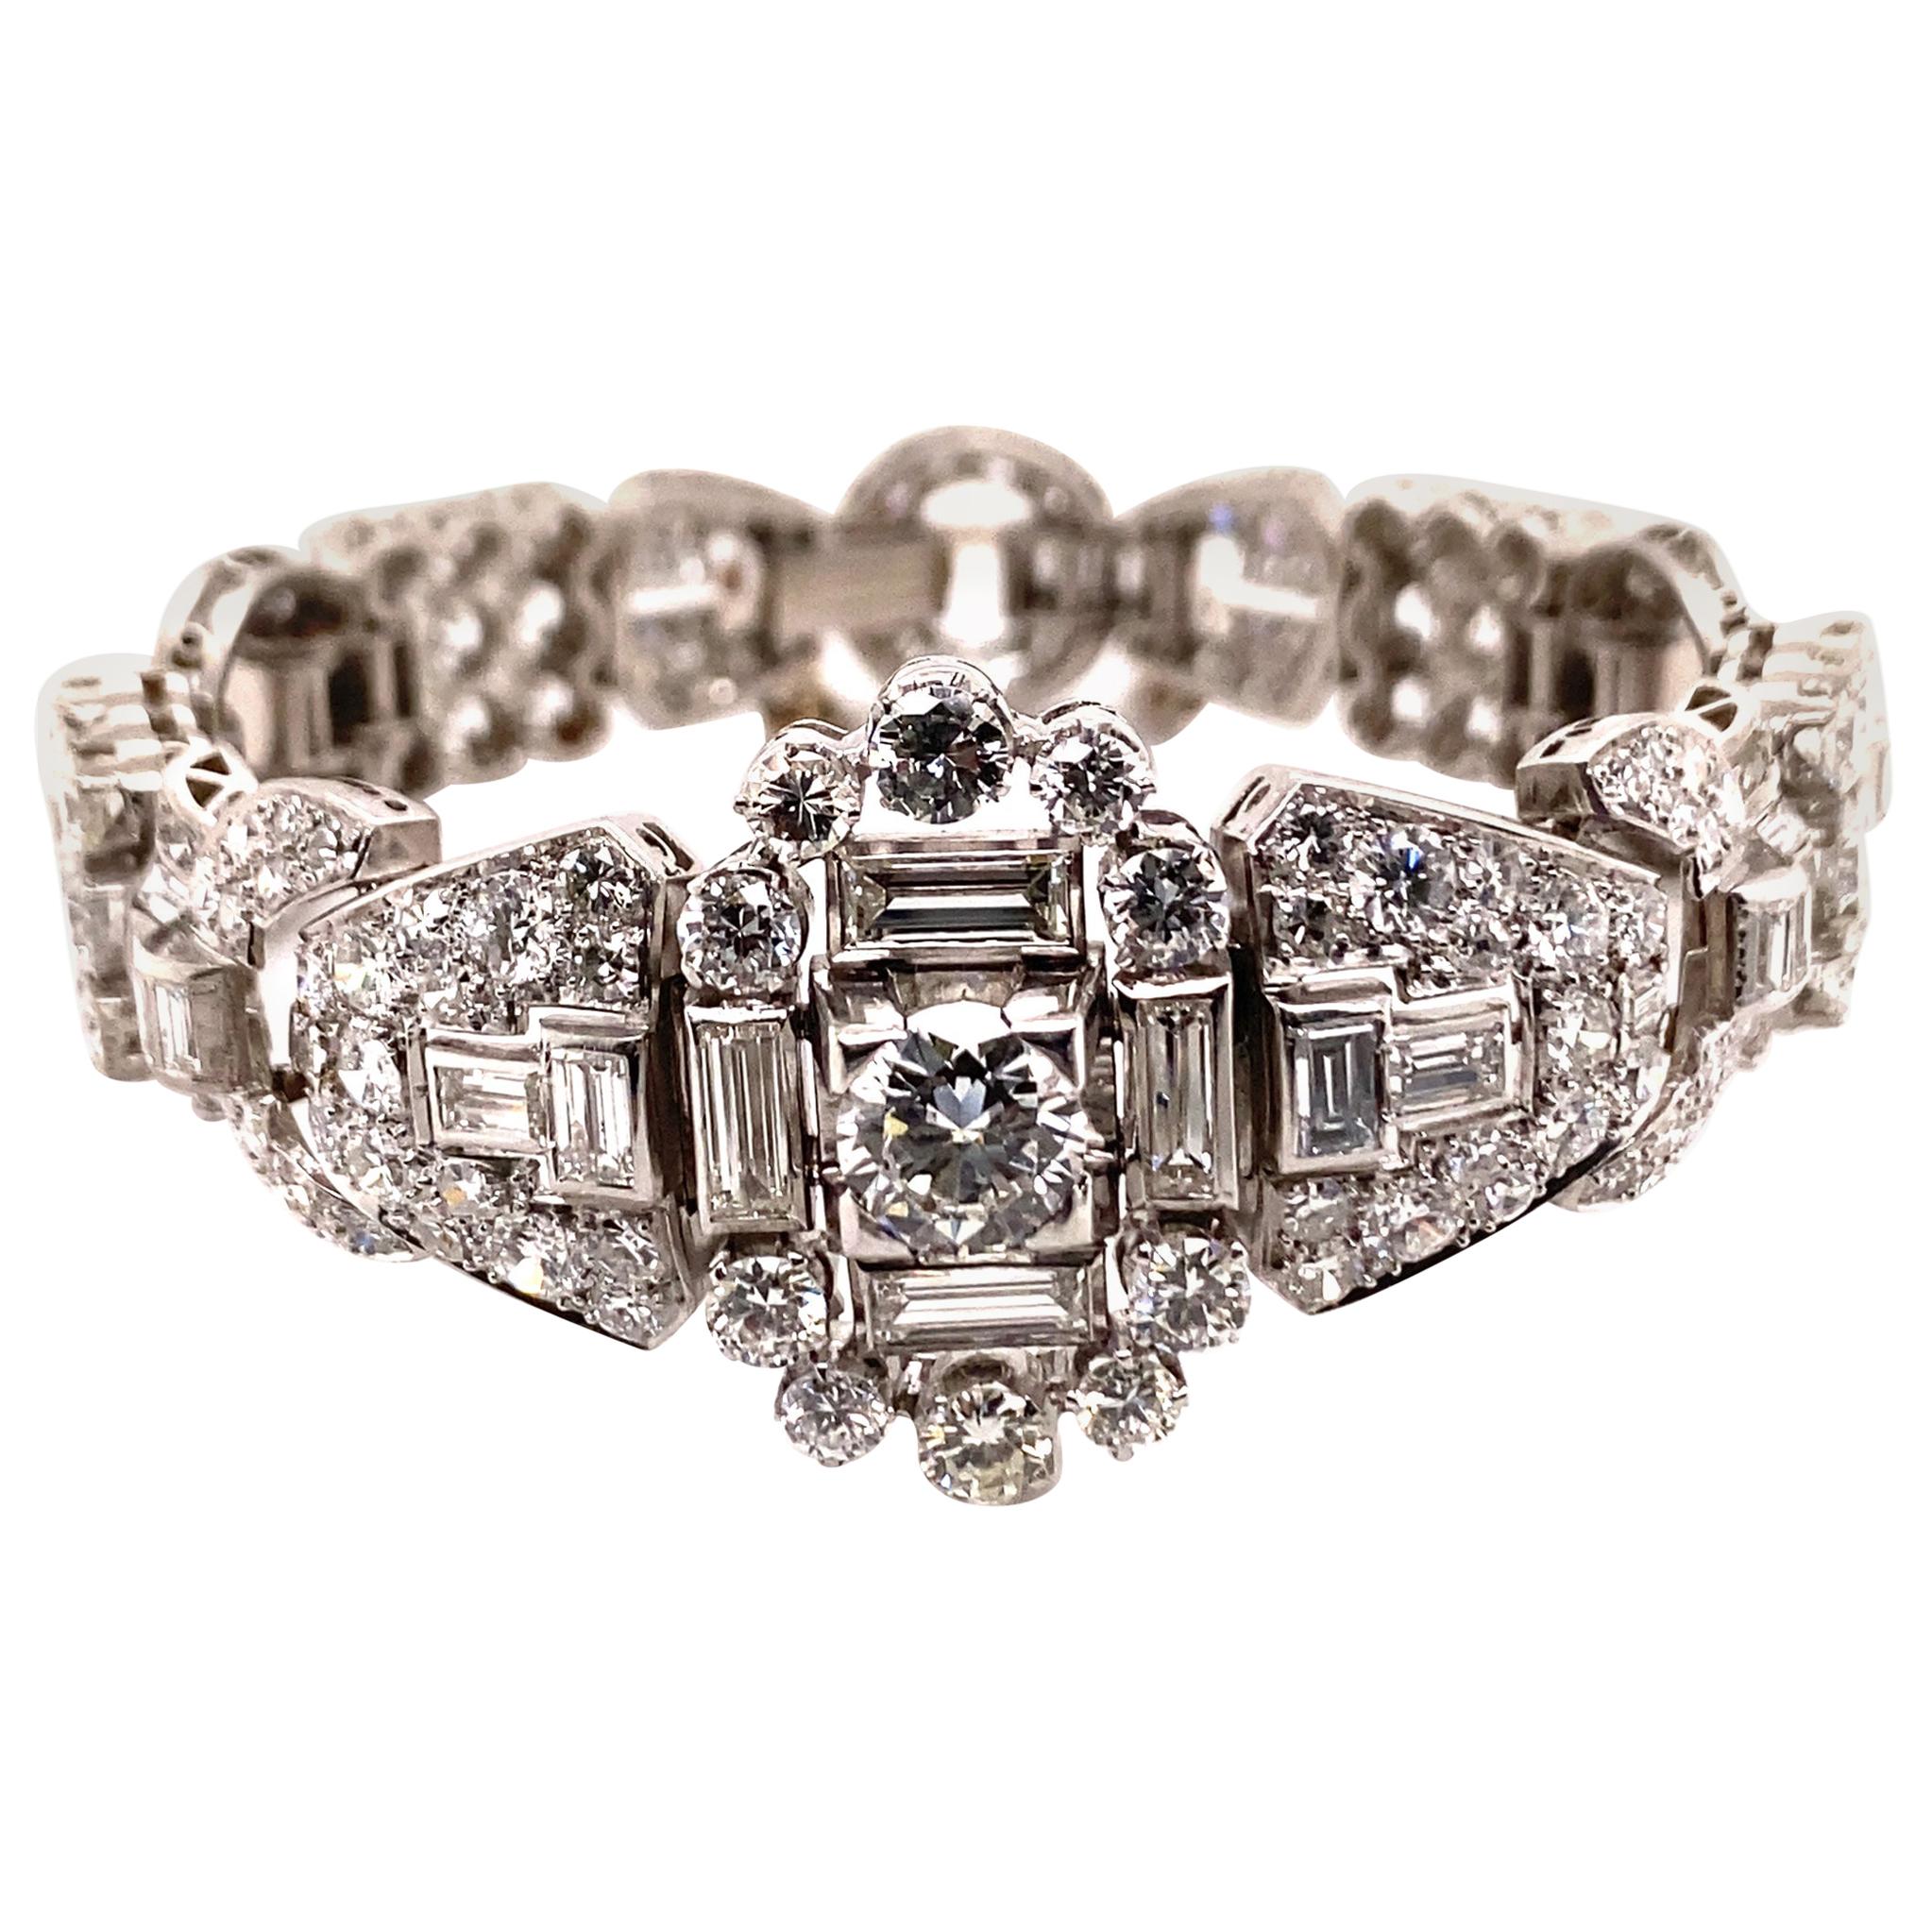 Art Deco Style Diamond Bracelet in Platinum 950